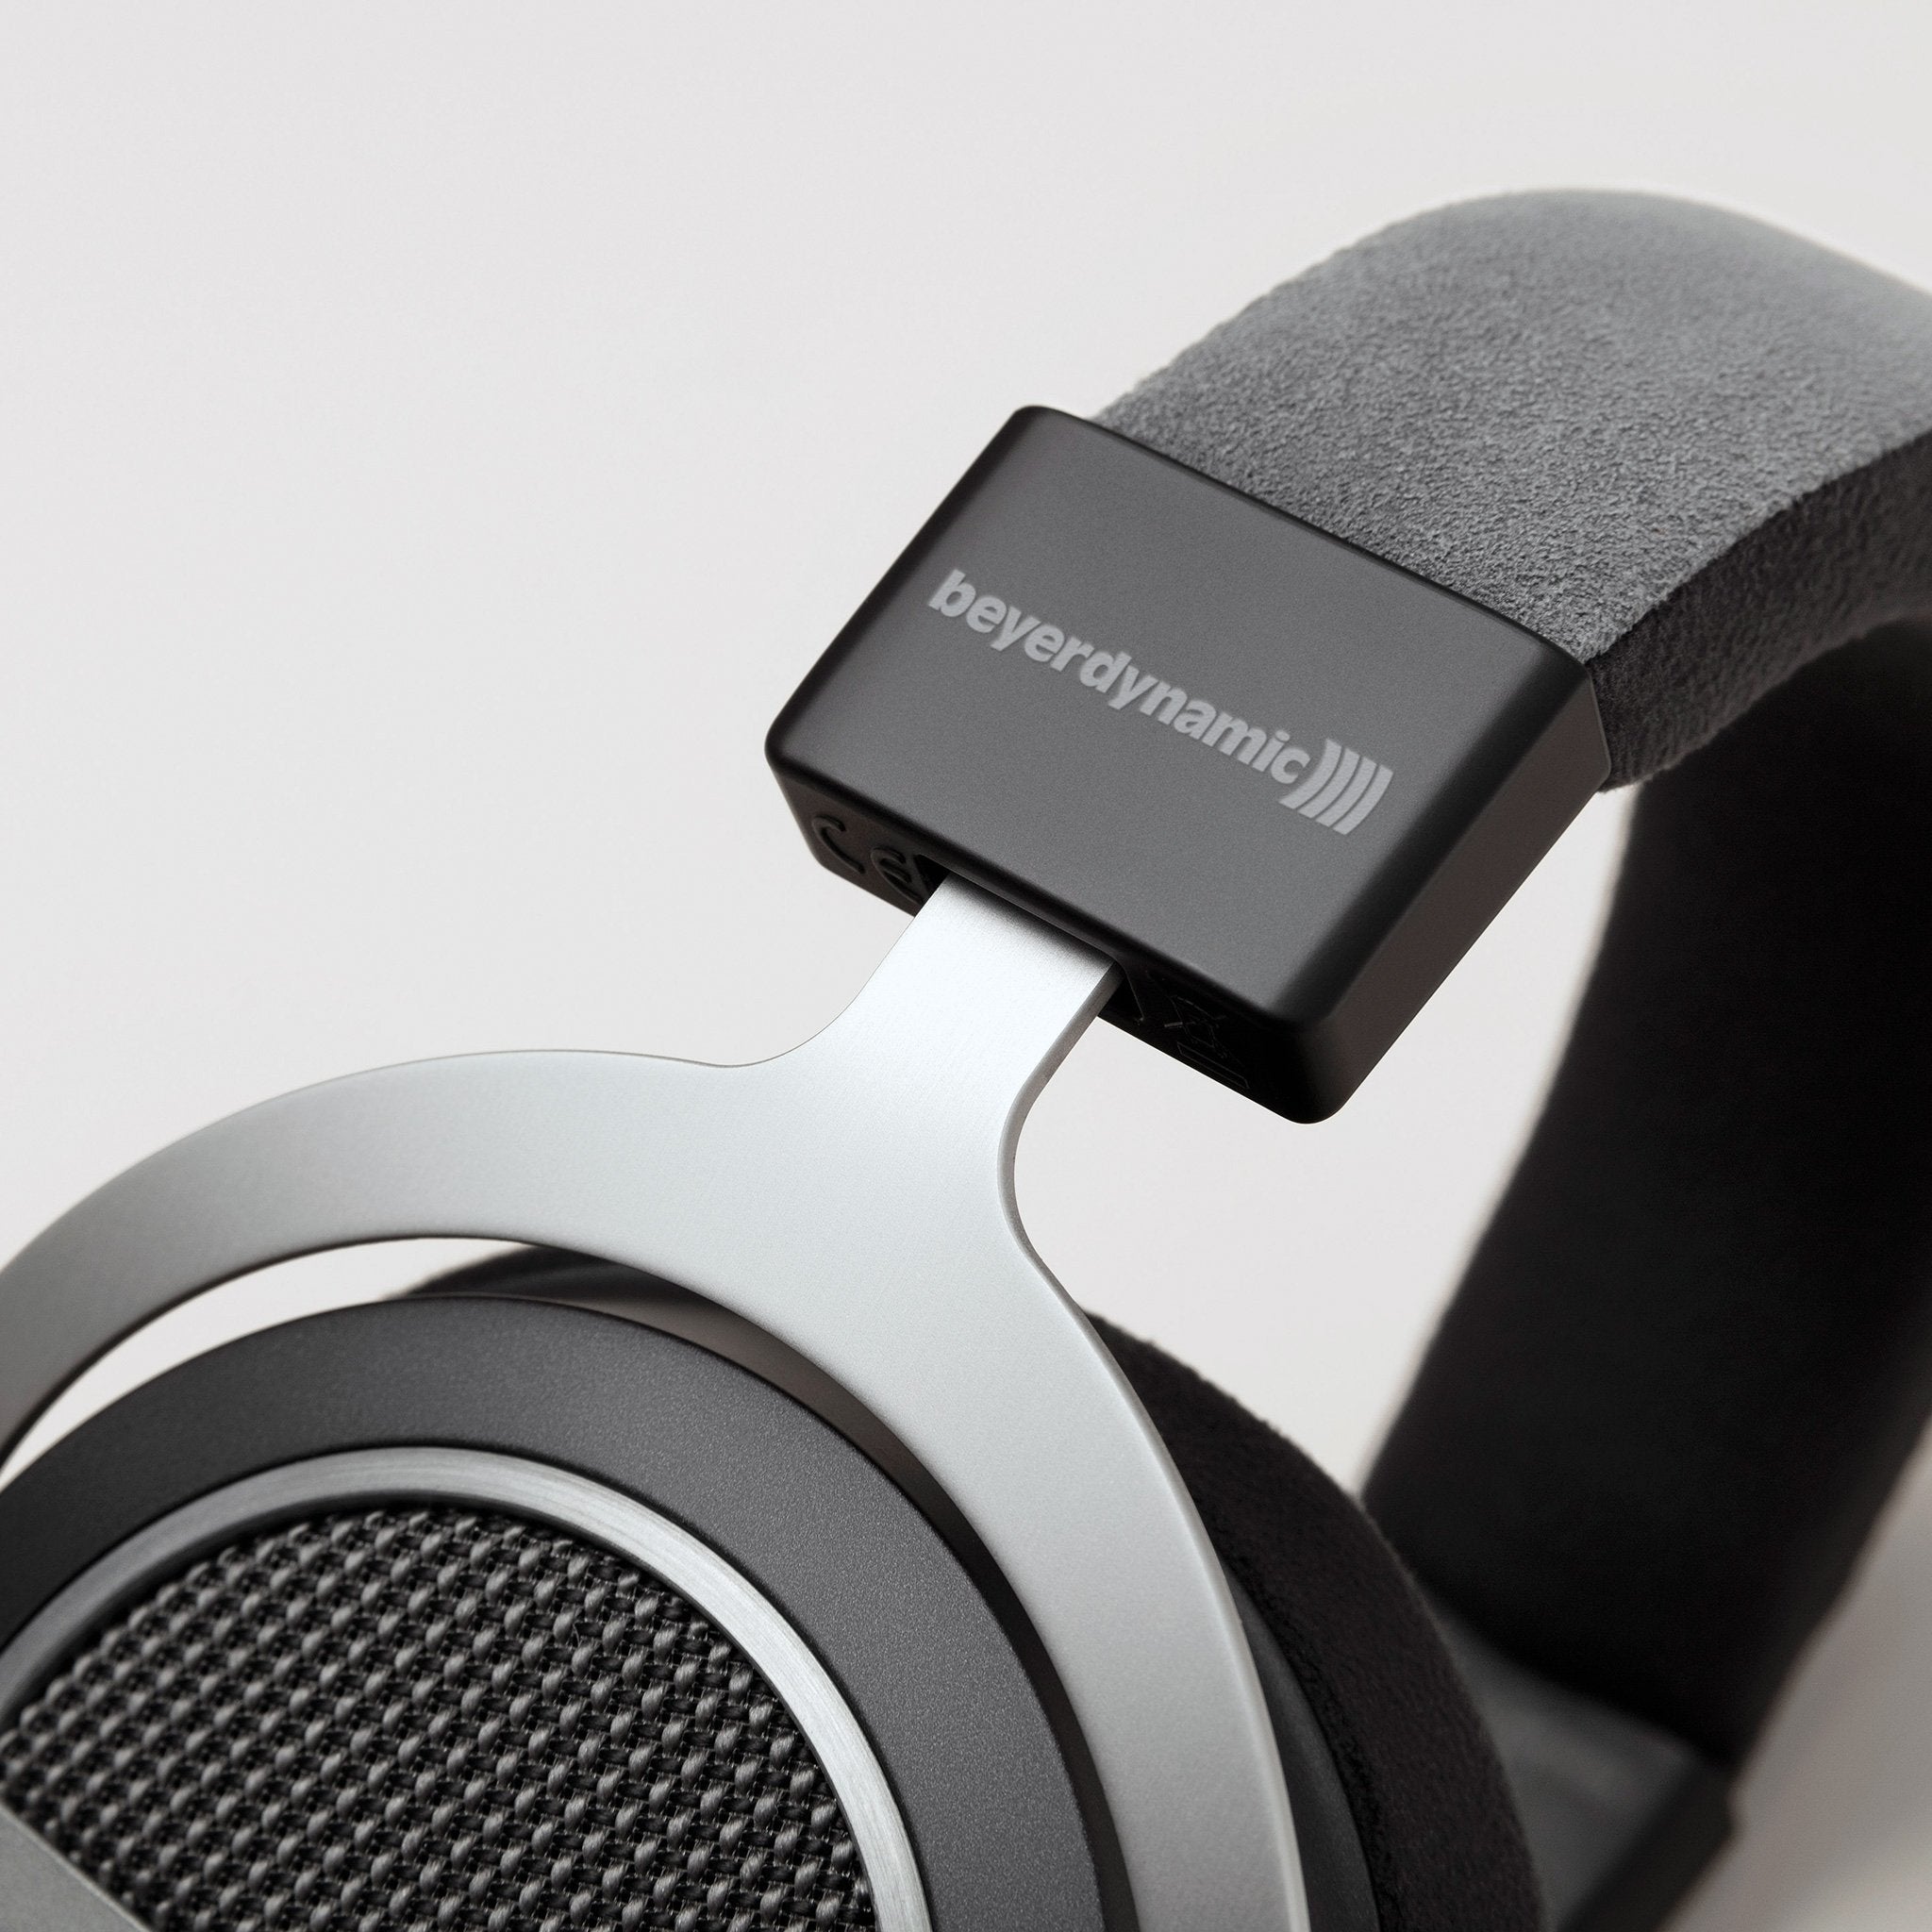 Beyerdynamic Amiron review: comfortable headphones, quality sound